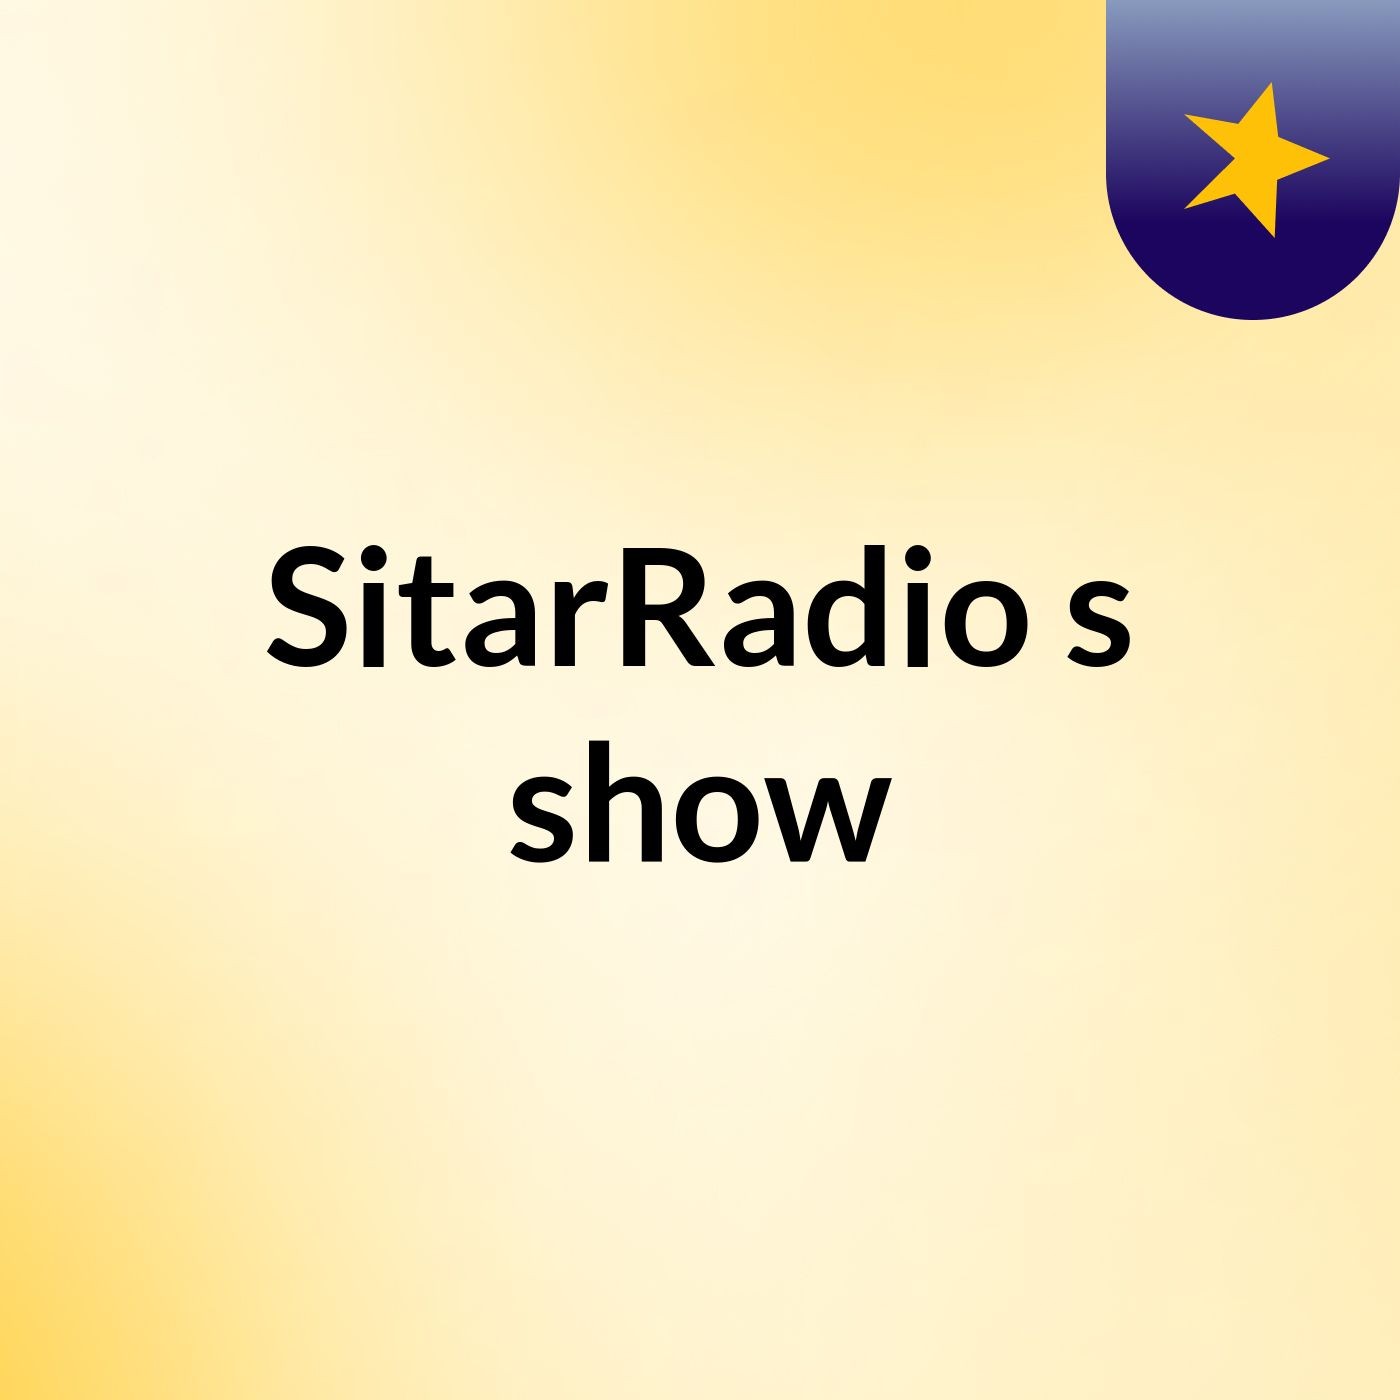 SitarRadio's show